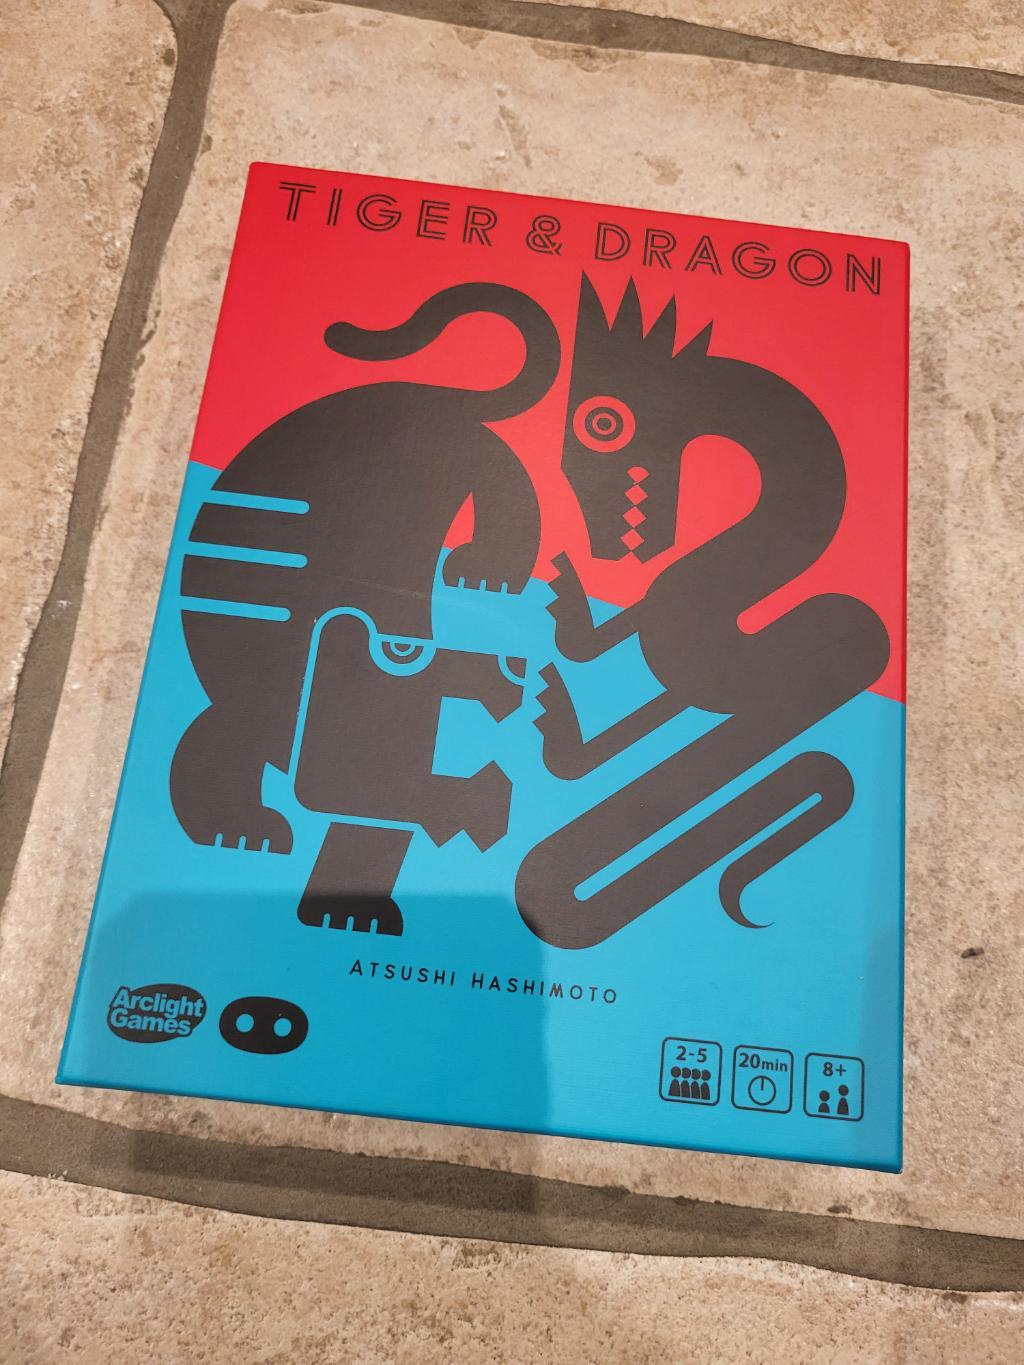 Tiger And Dragon